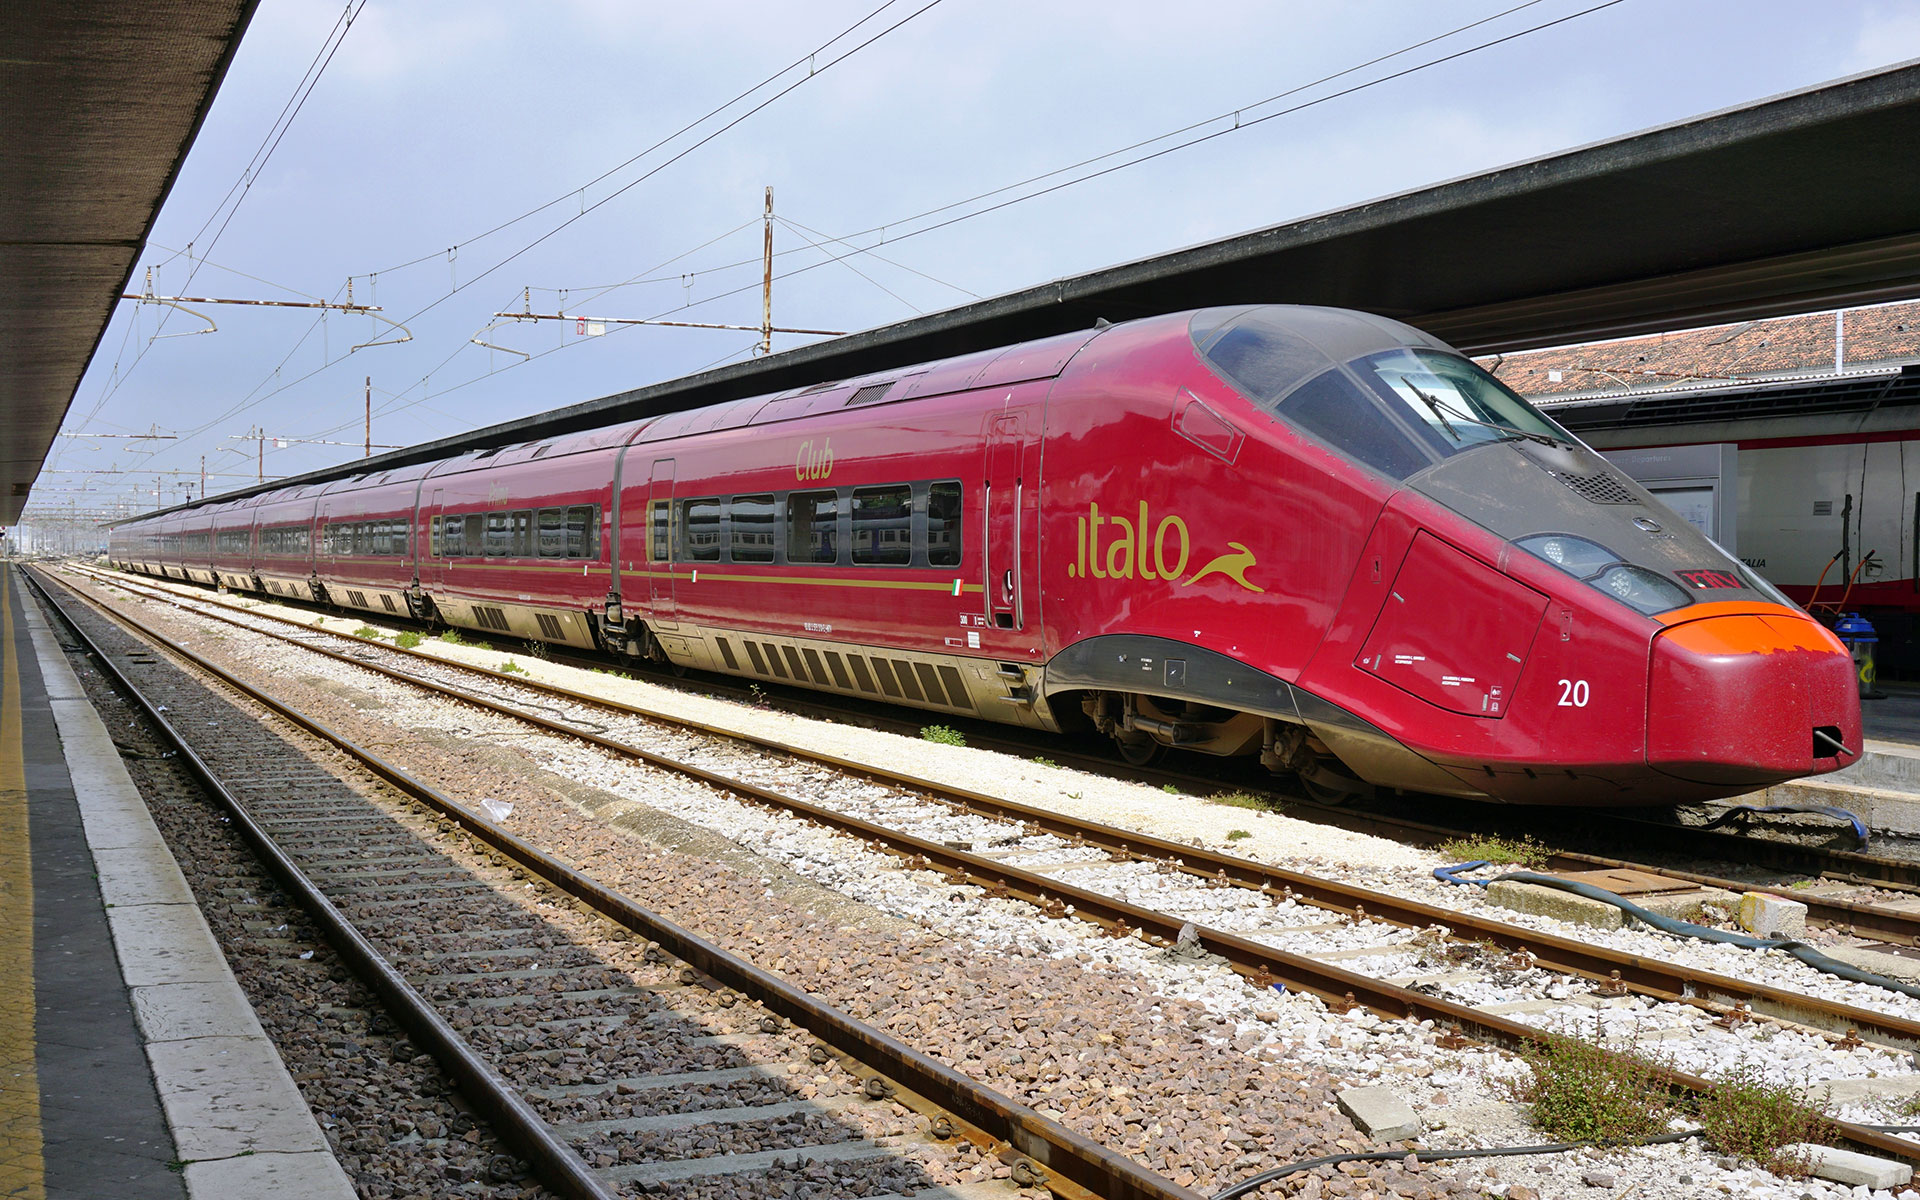 Italo's sleek red trains will regularly serve Genoa on Italy's Ligurian coast from mid-December 2021 (photo © Eq Roy / dreamstime.com).